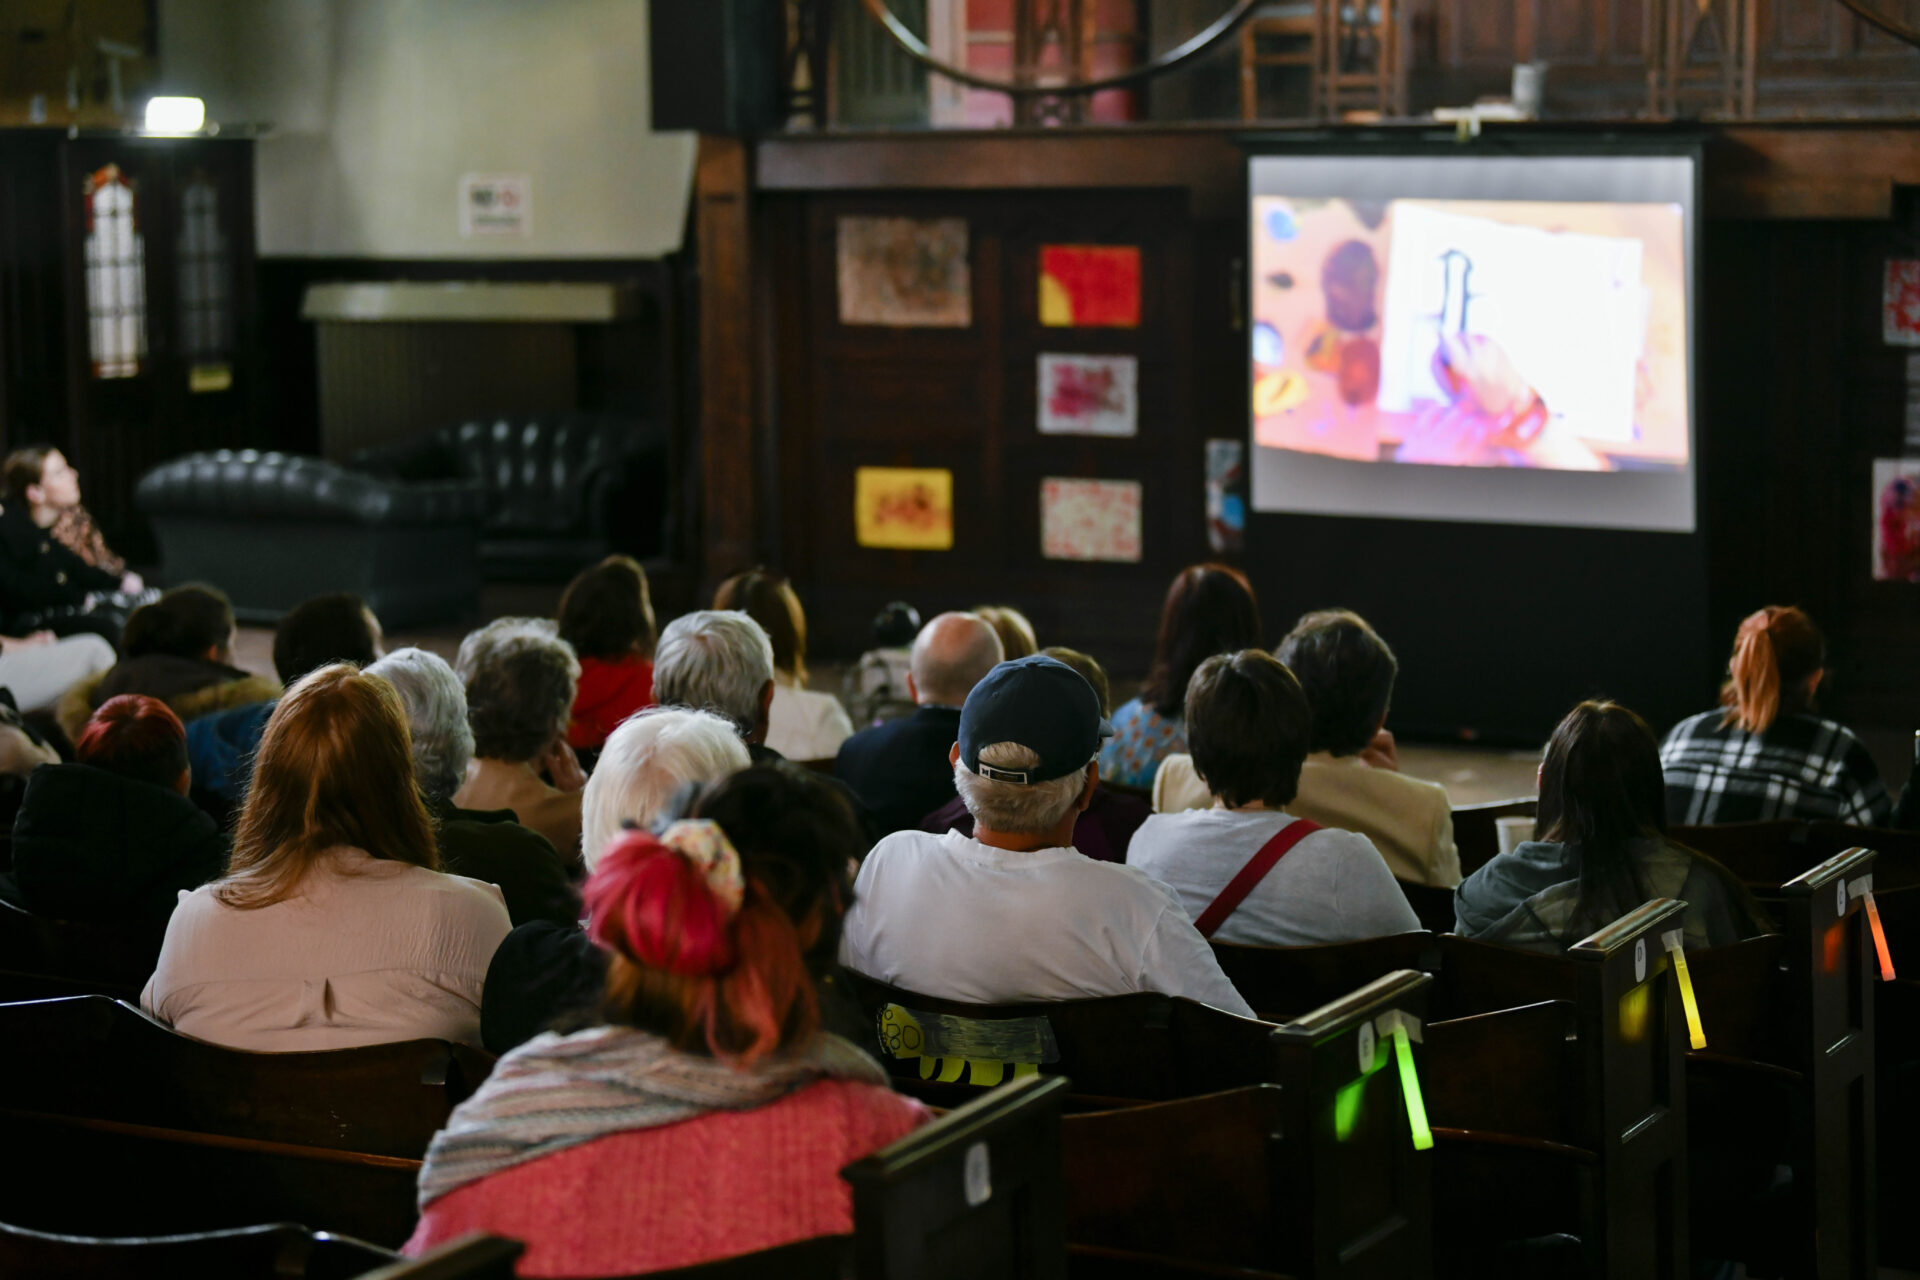 Audience members watching a Film Screening Event.